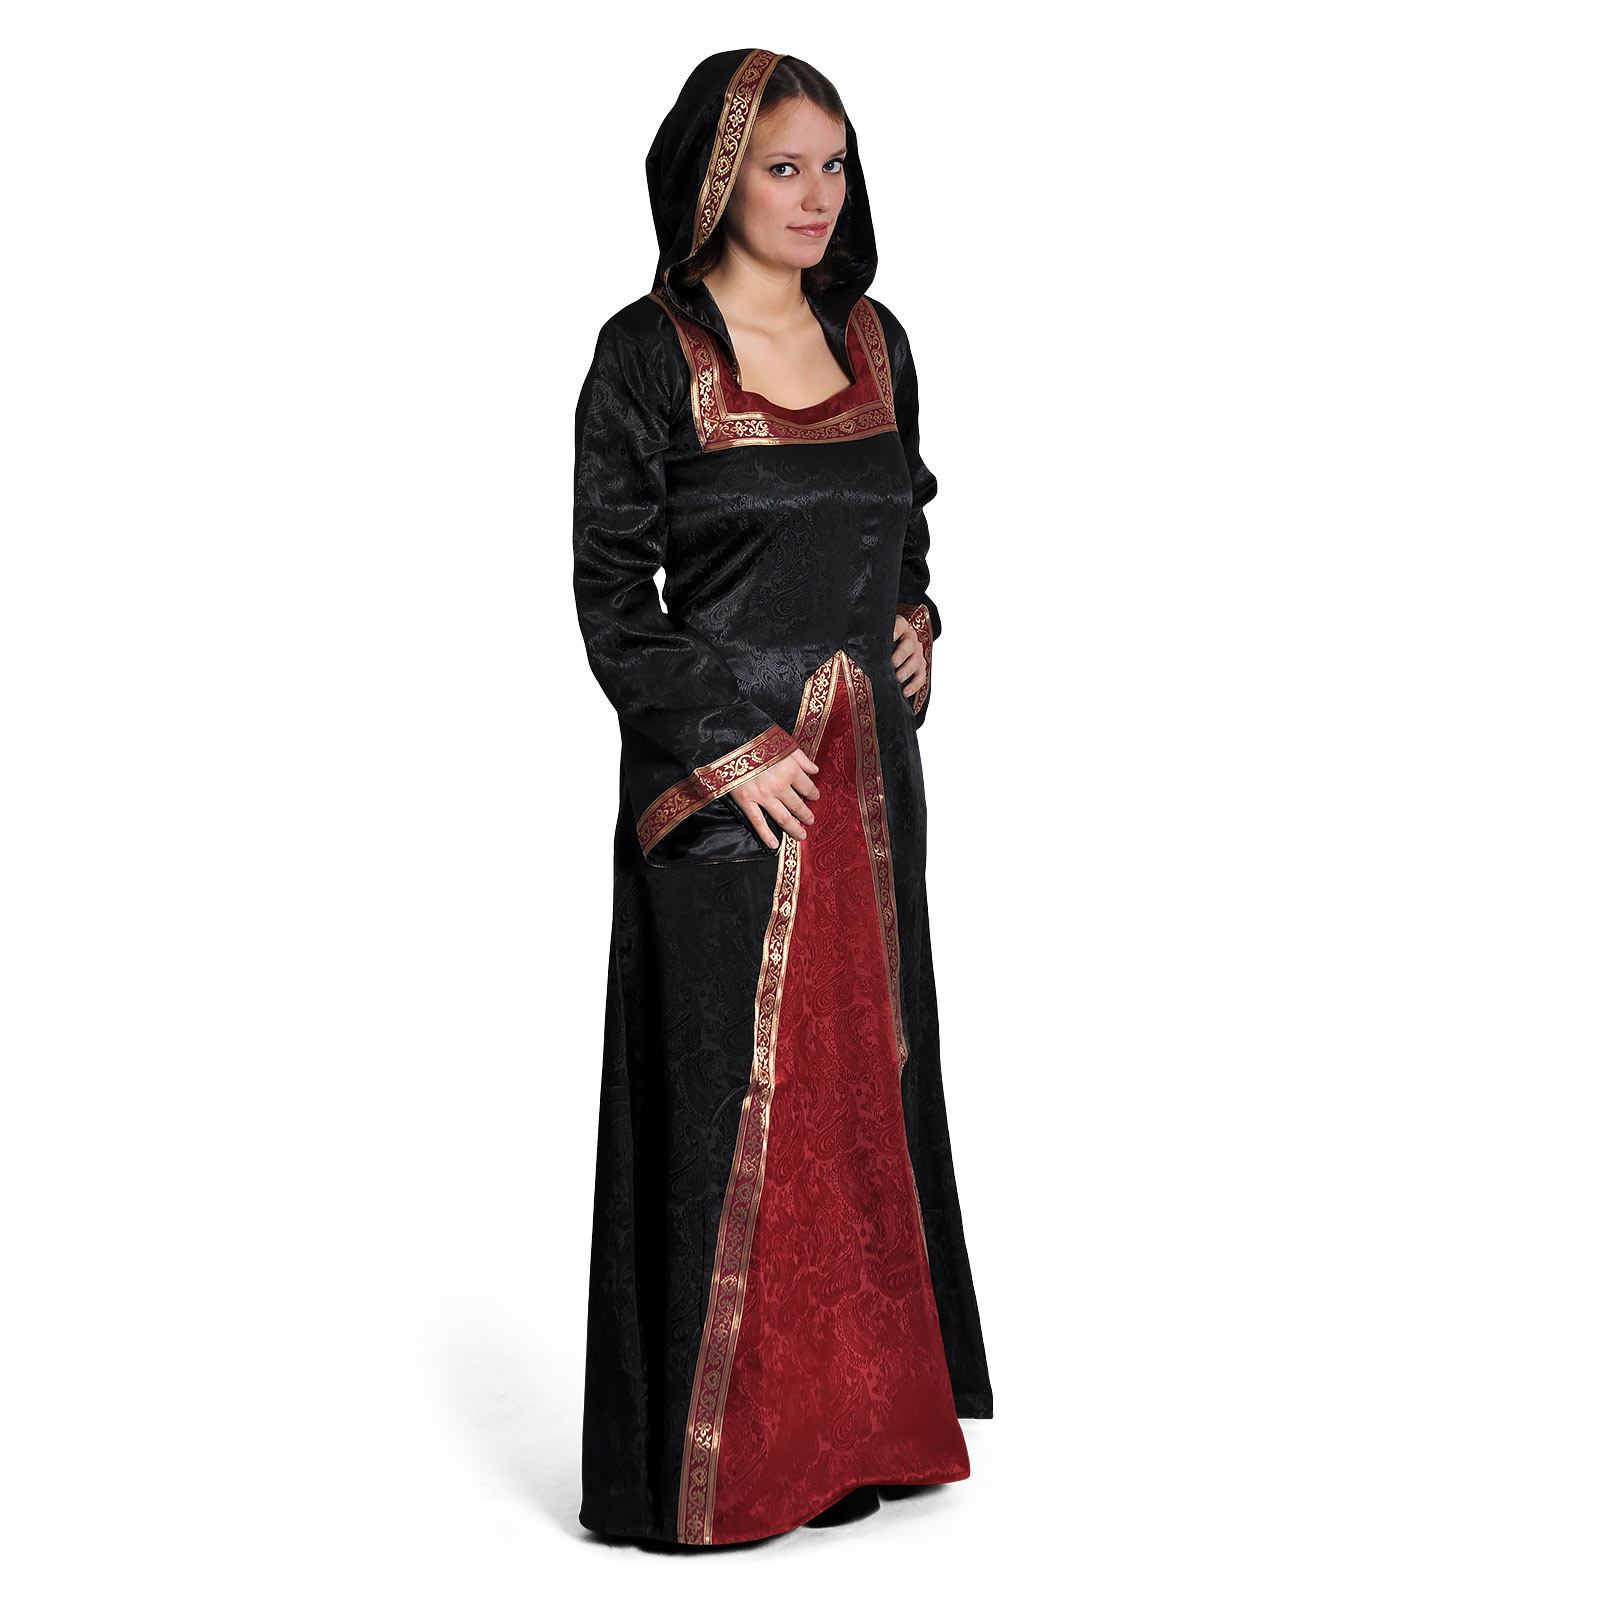 Mittelalter Kleid Otilia mit Zipfelkapuze schwarz-bordeaux